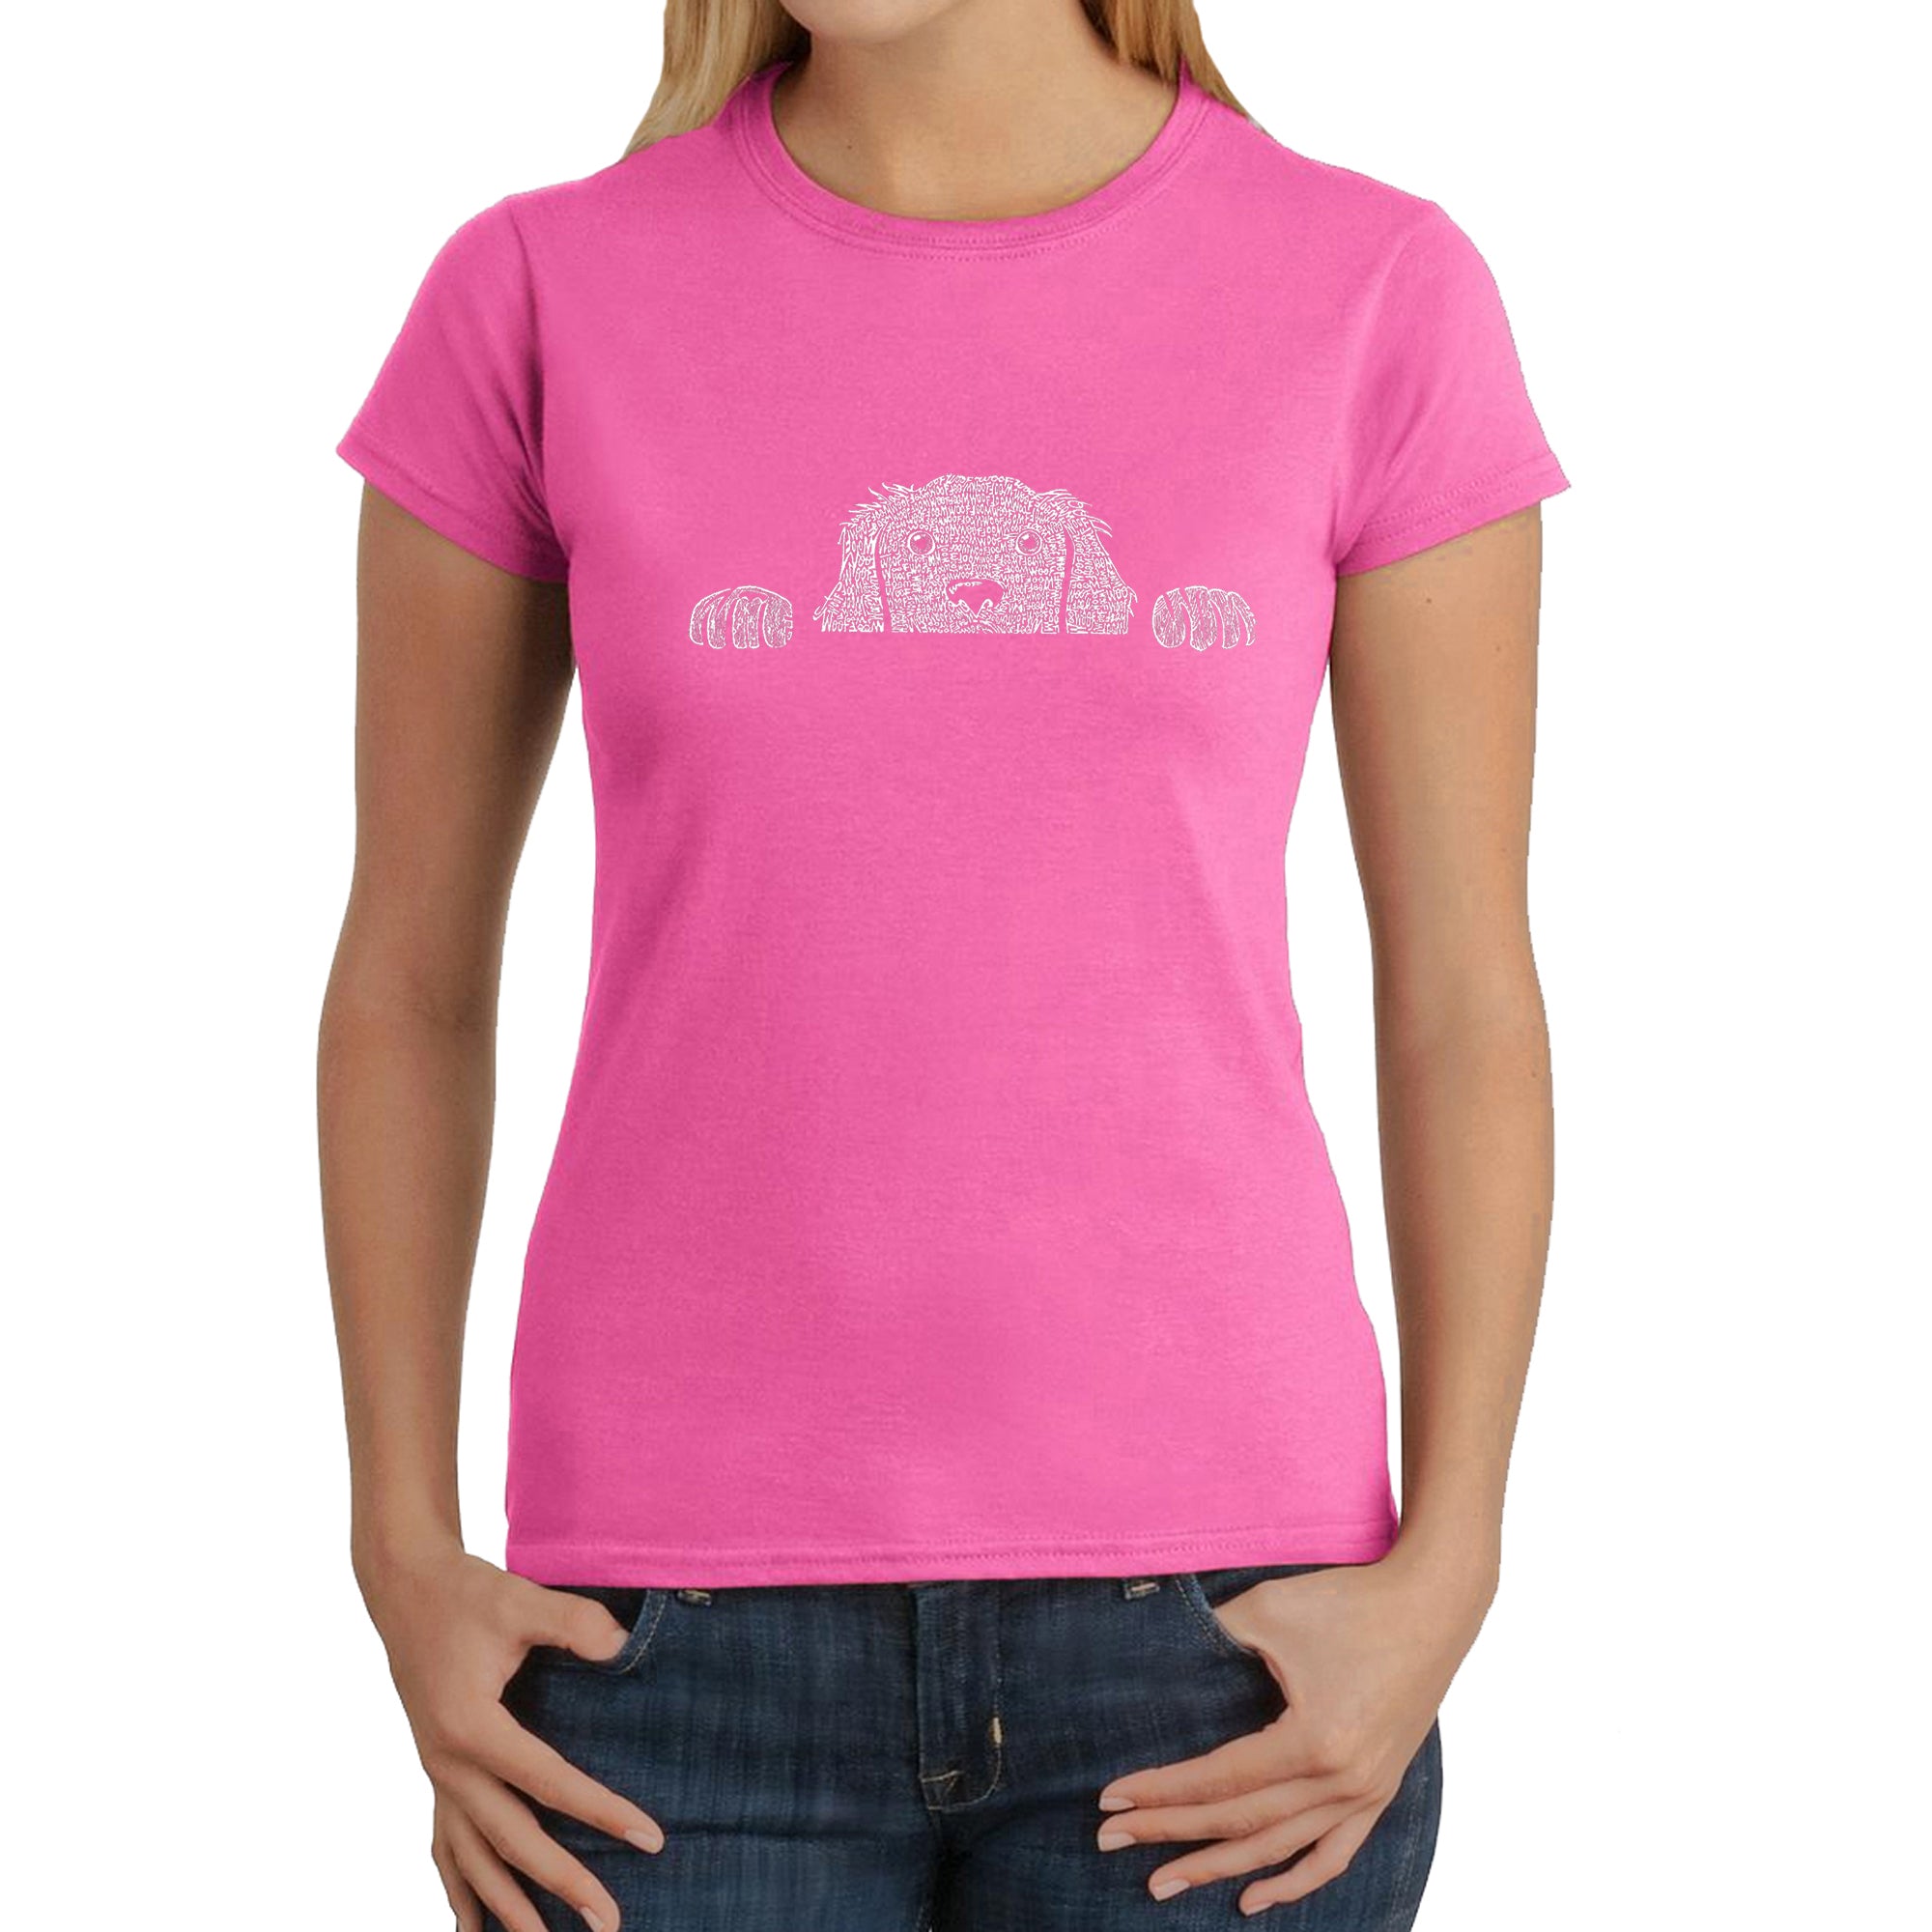 Peeking Dog - Women's Word Art T-Shirt - Pink - Small